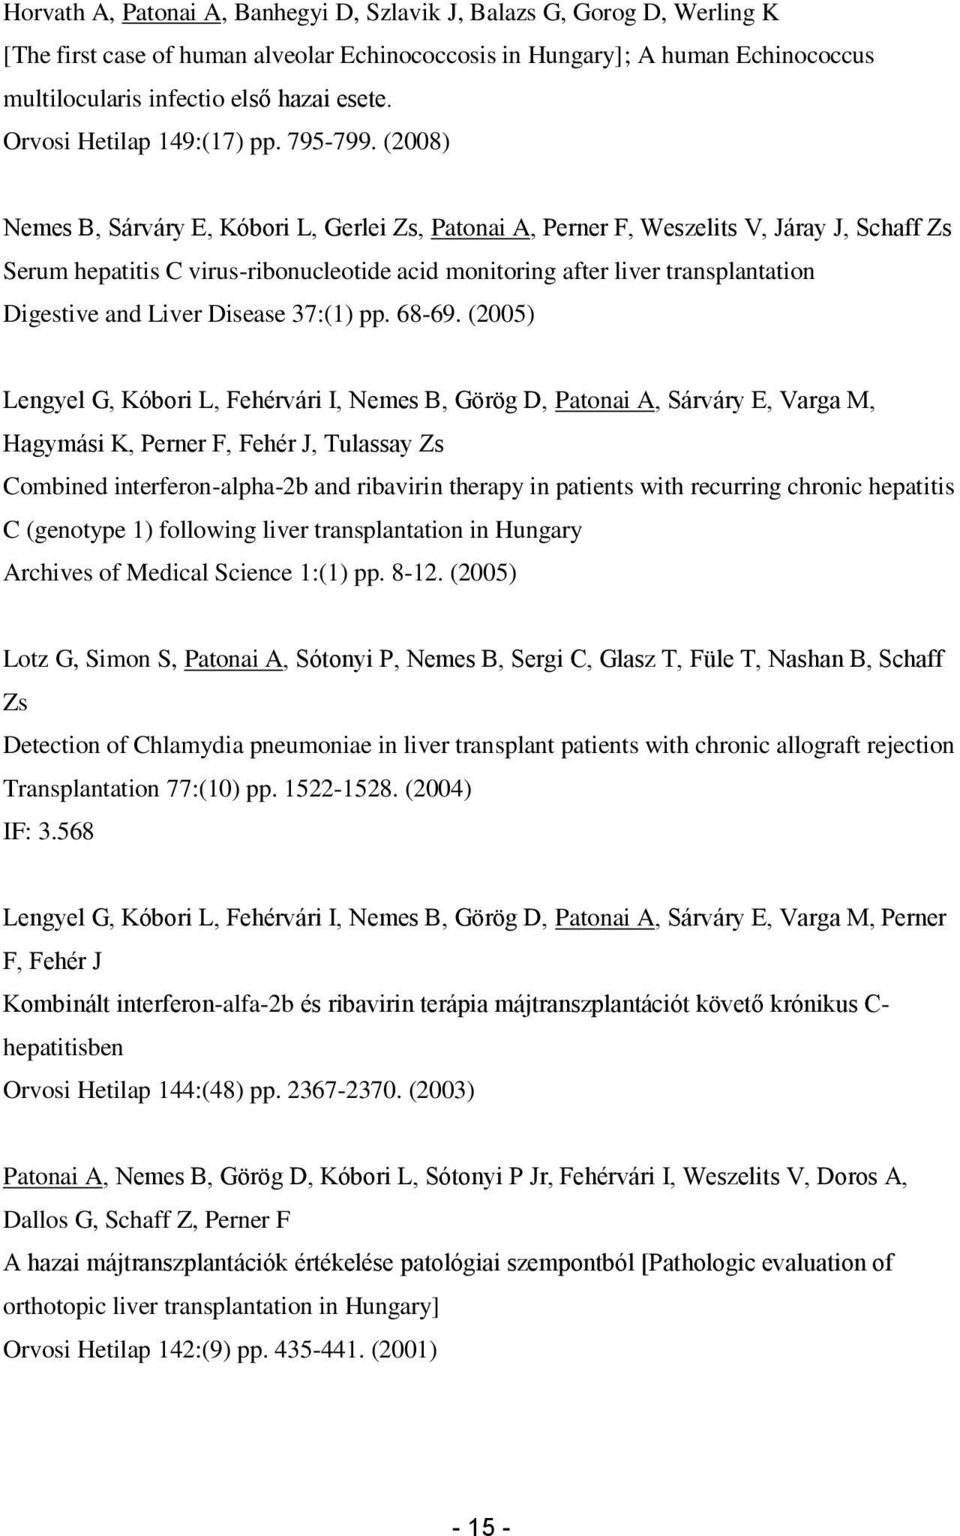 (2008) Nemes B, Sárváry E, Kóbori L, Gerlei Zs, Patonai A, Perner F, Weszelits V, Járay J, Schaff Zs Serum hepatitis C virus-ribonucleotide acid monitoring after liver transplantation Digestive and